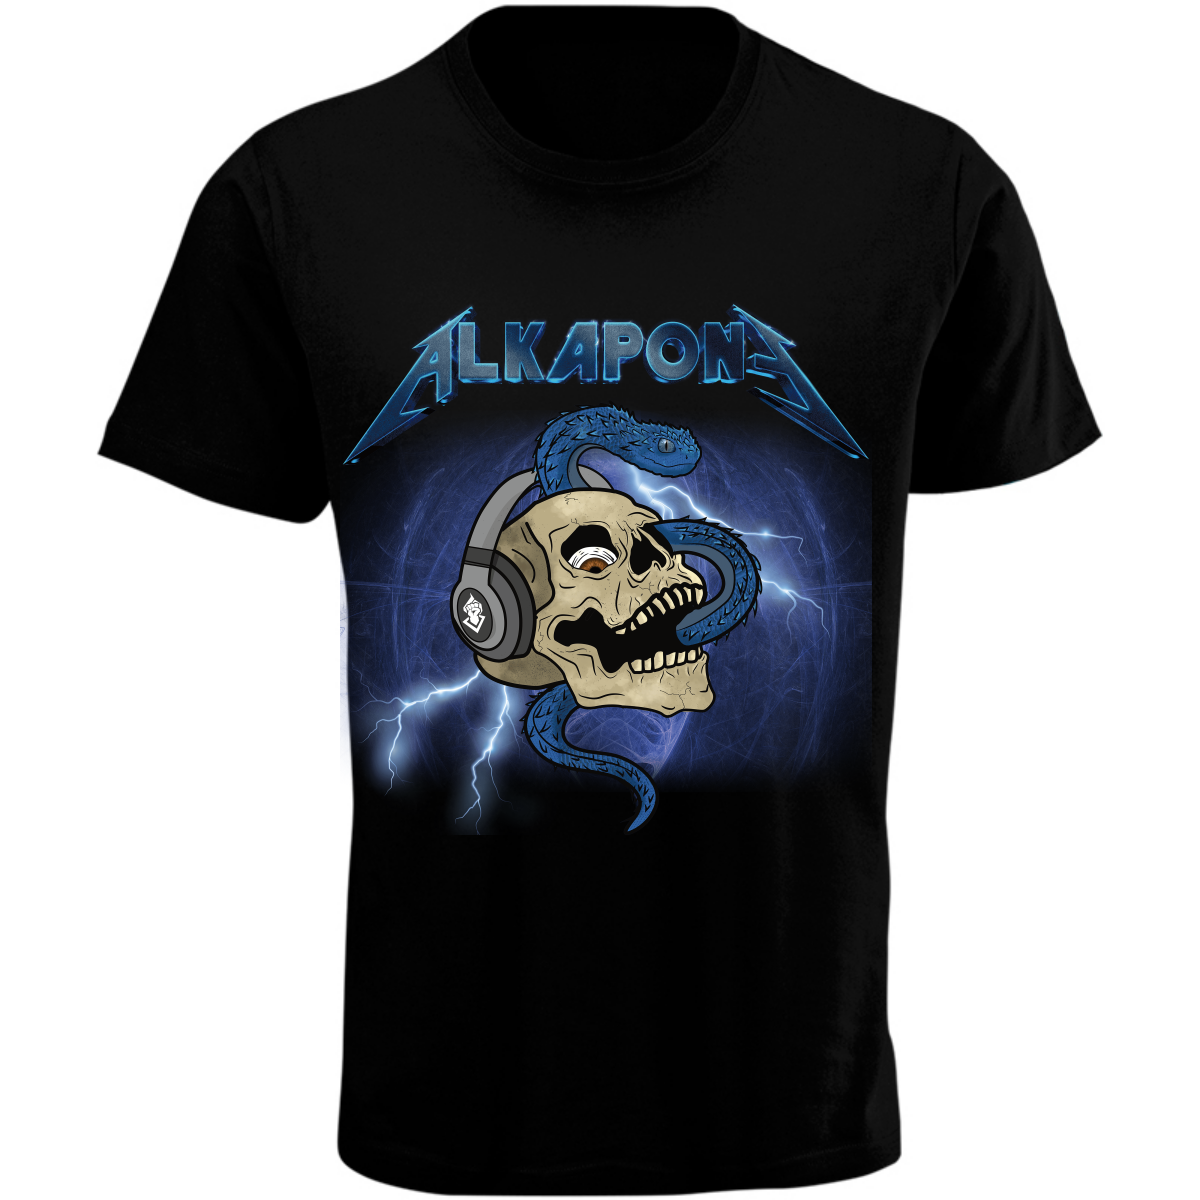 Men's alkapone metallic lightning bolt t-shirt with skull